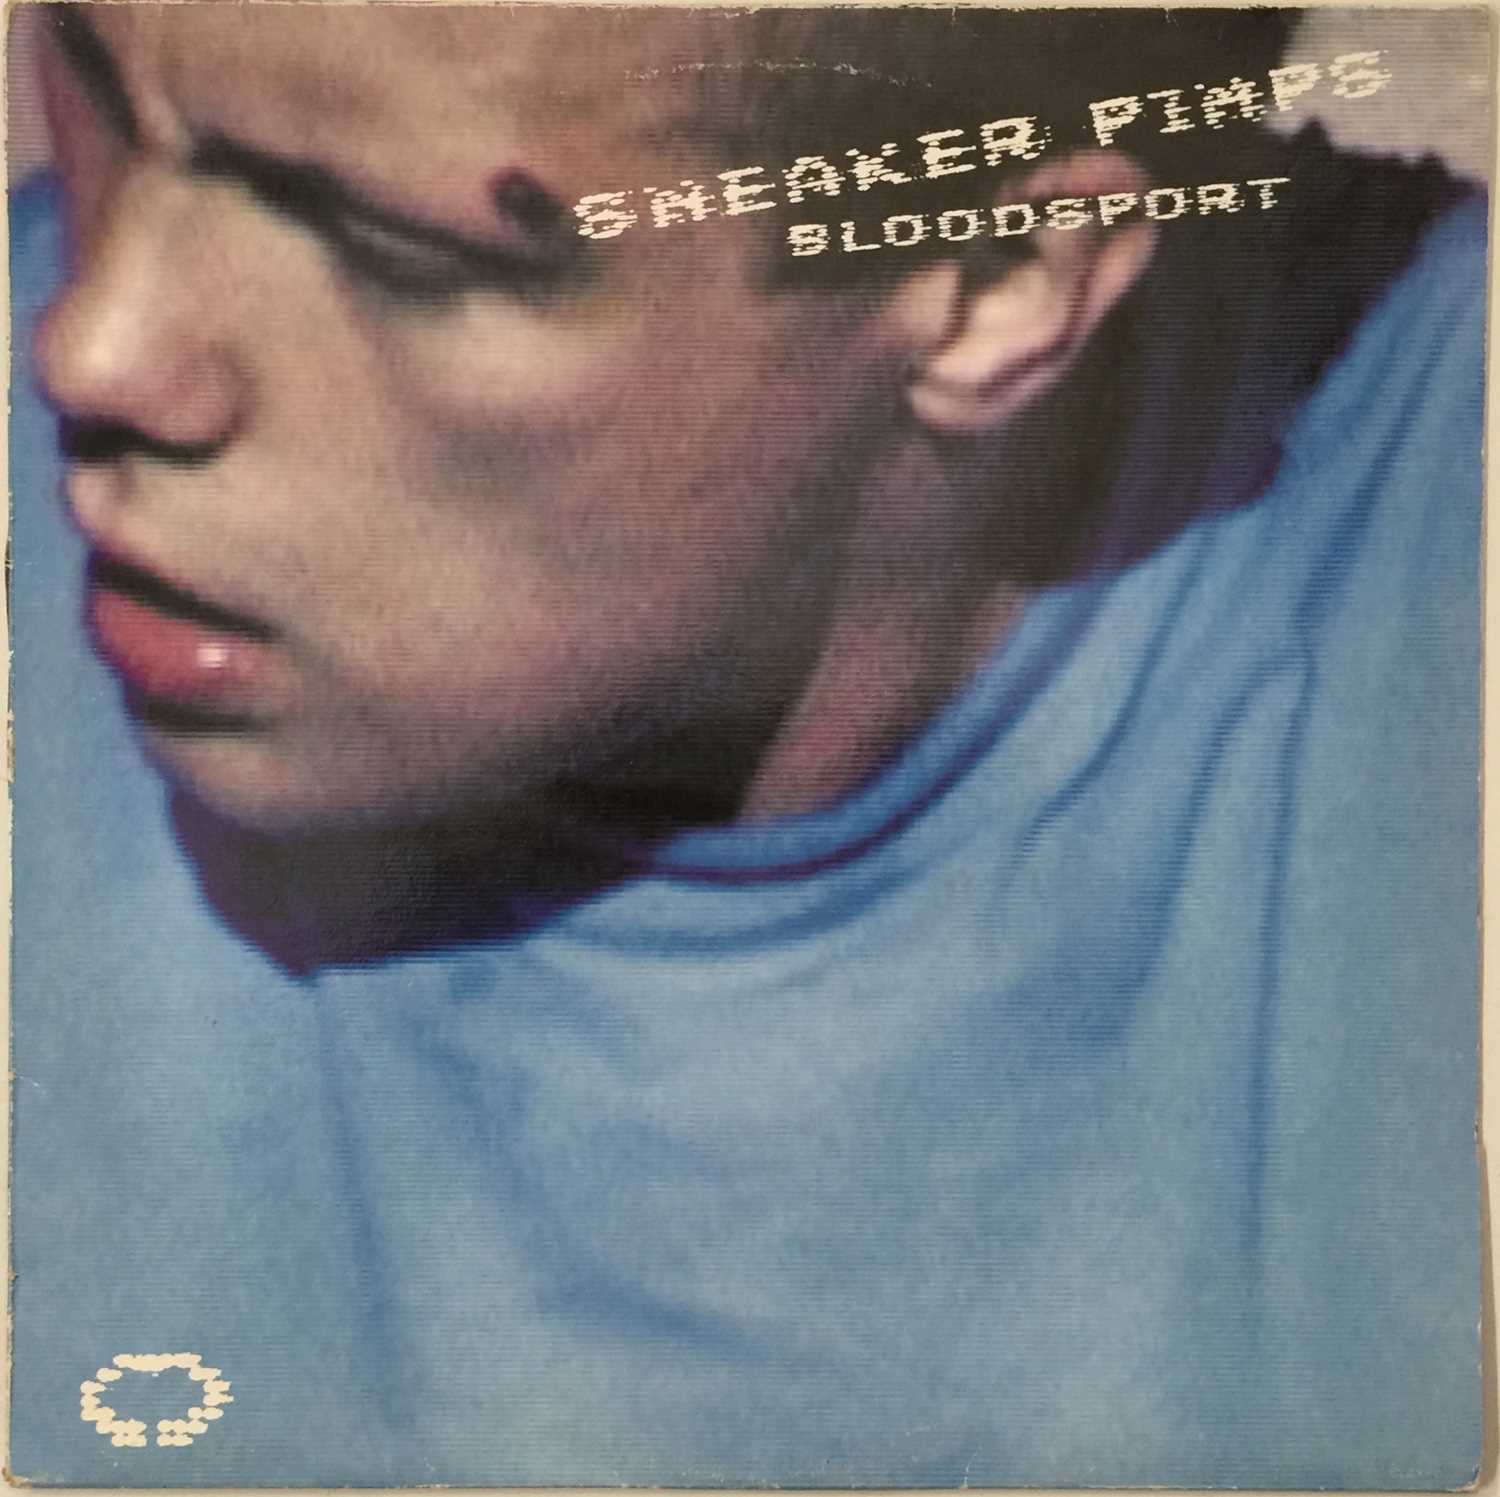 SNEAKER PIMPS - BLOODSPORT LP (ORIGINAL EU 2002 RED VINYL PRESSING - TOMMY BOY TBV 1532) - Image 2 of 7